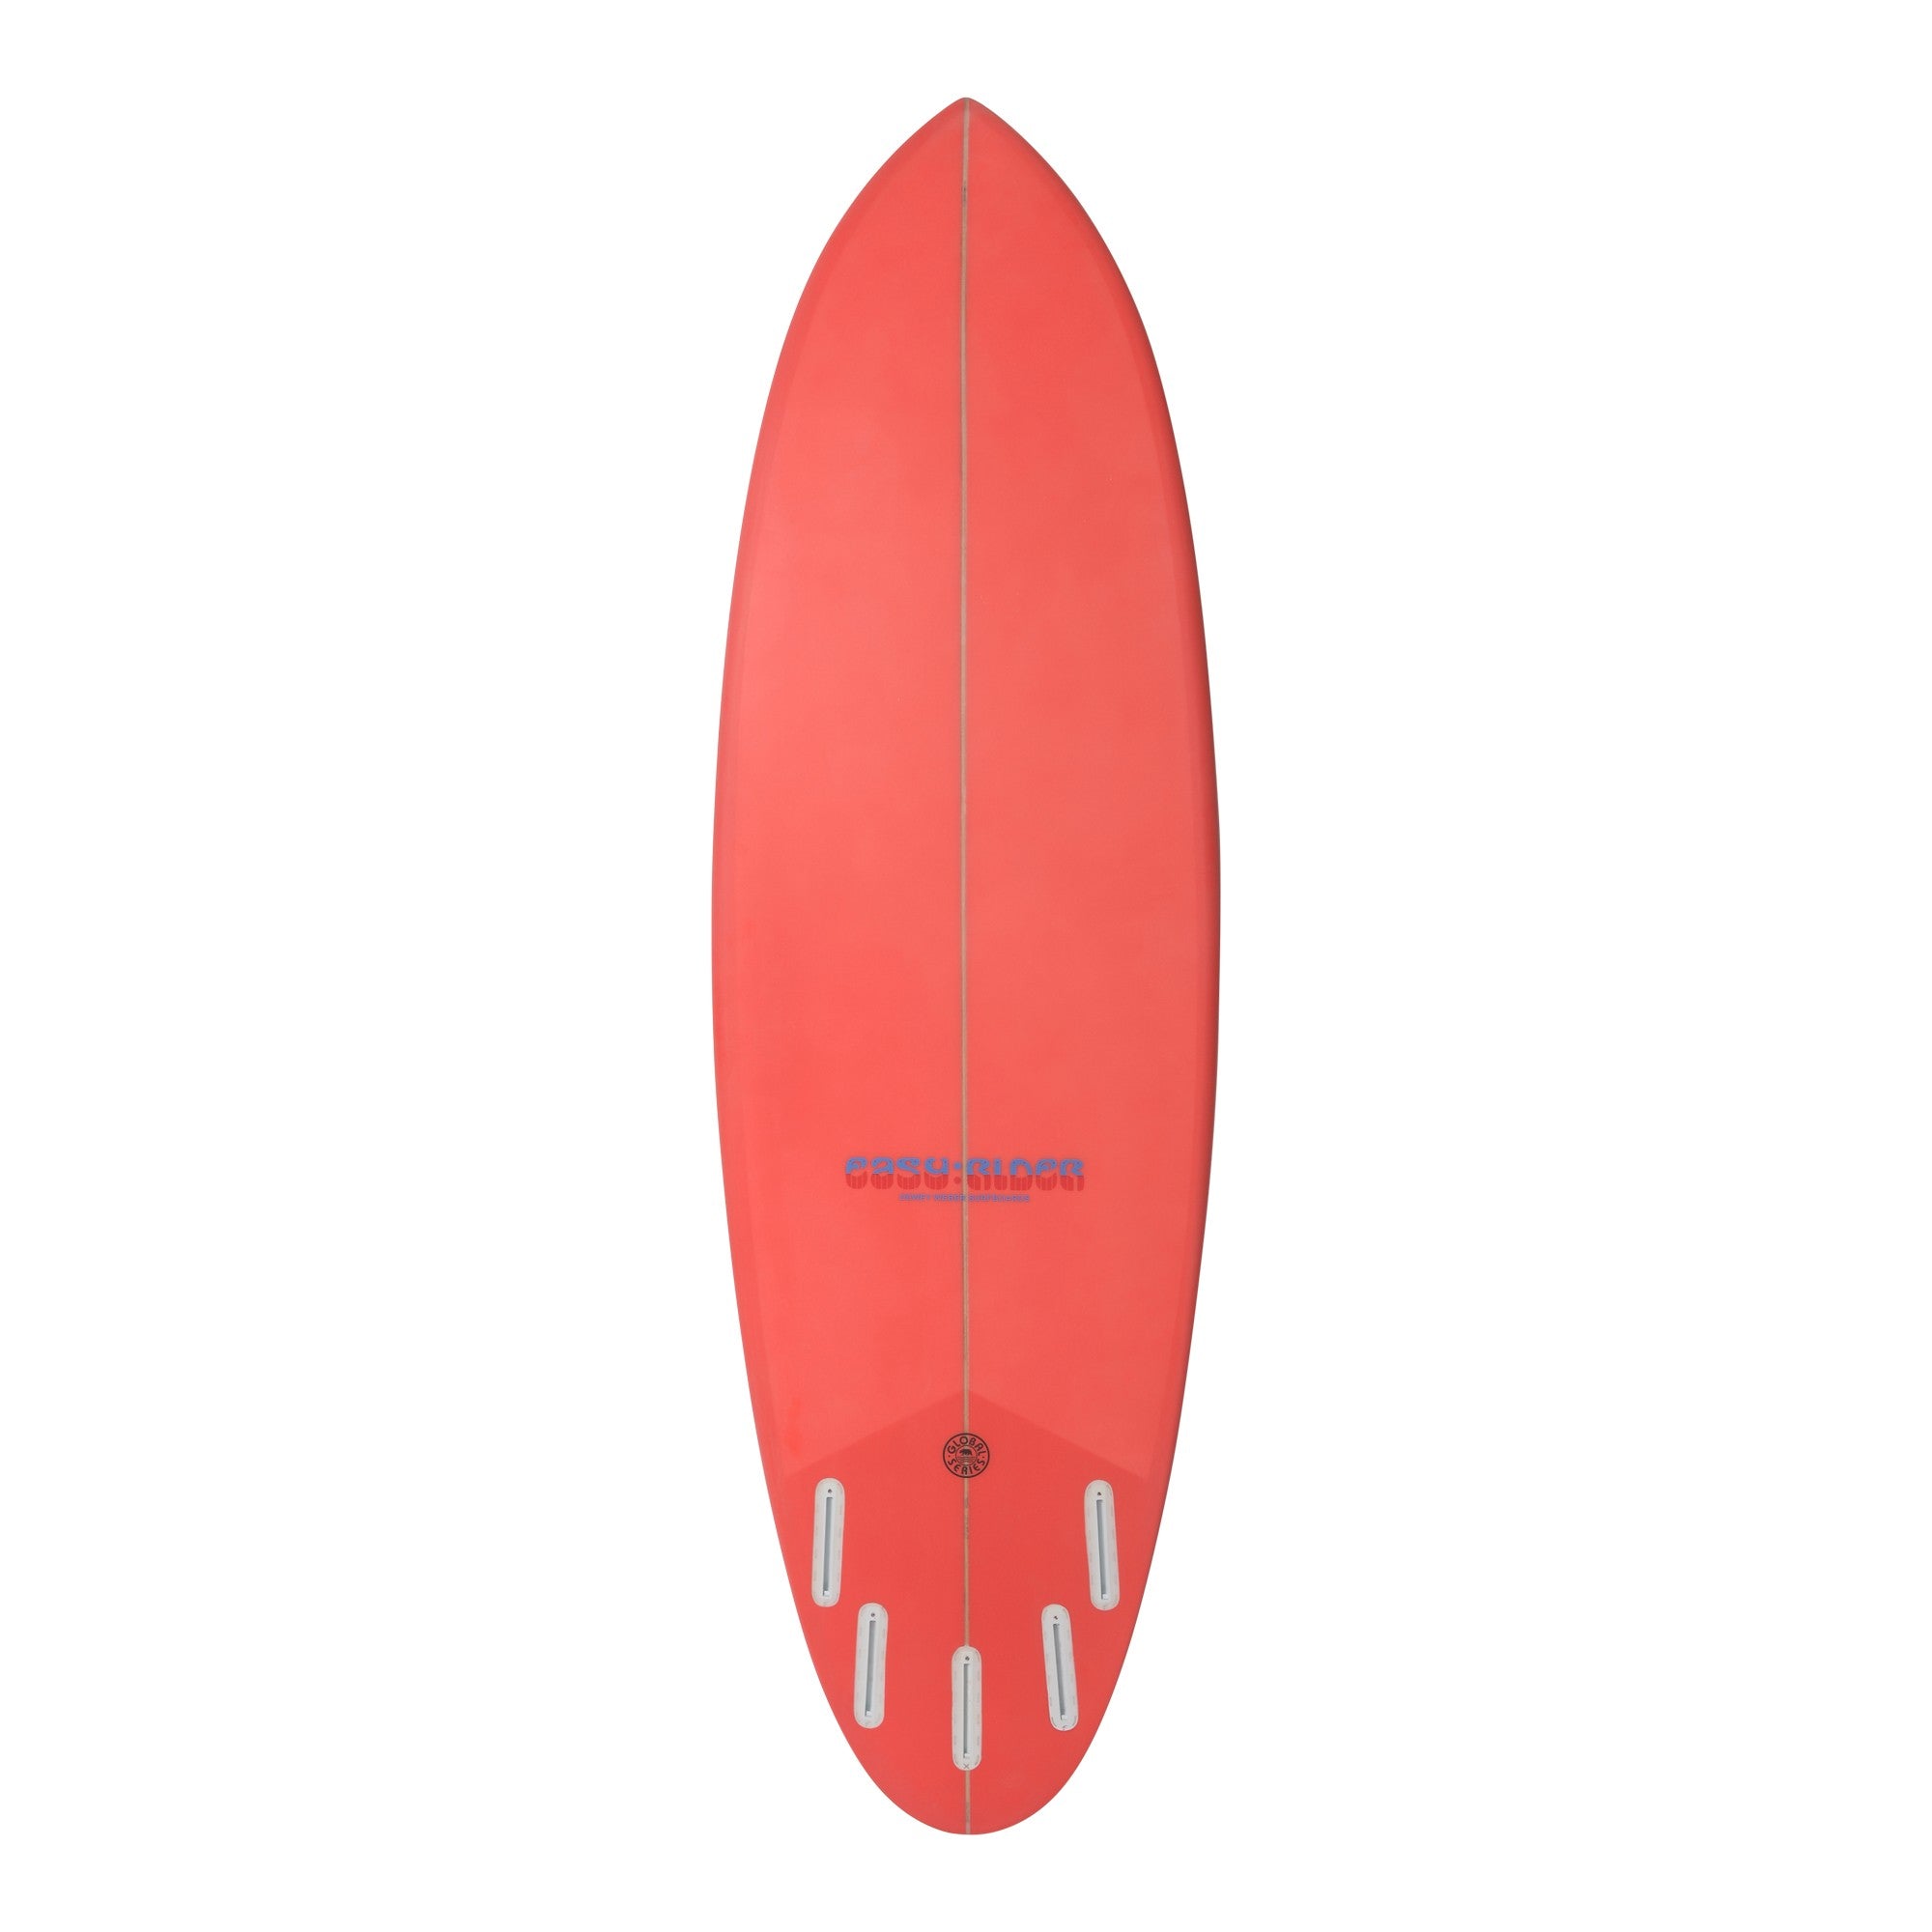 WEBER SURFBOARDS - Easy Rider 6'3 - Red